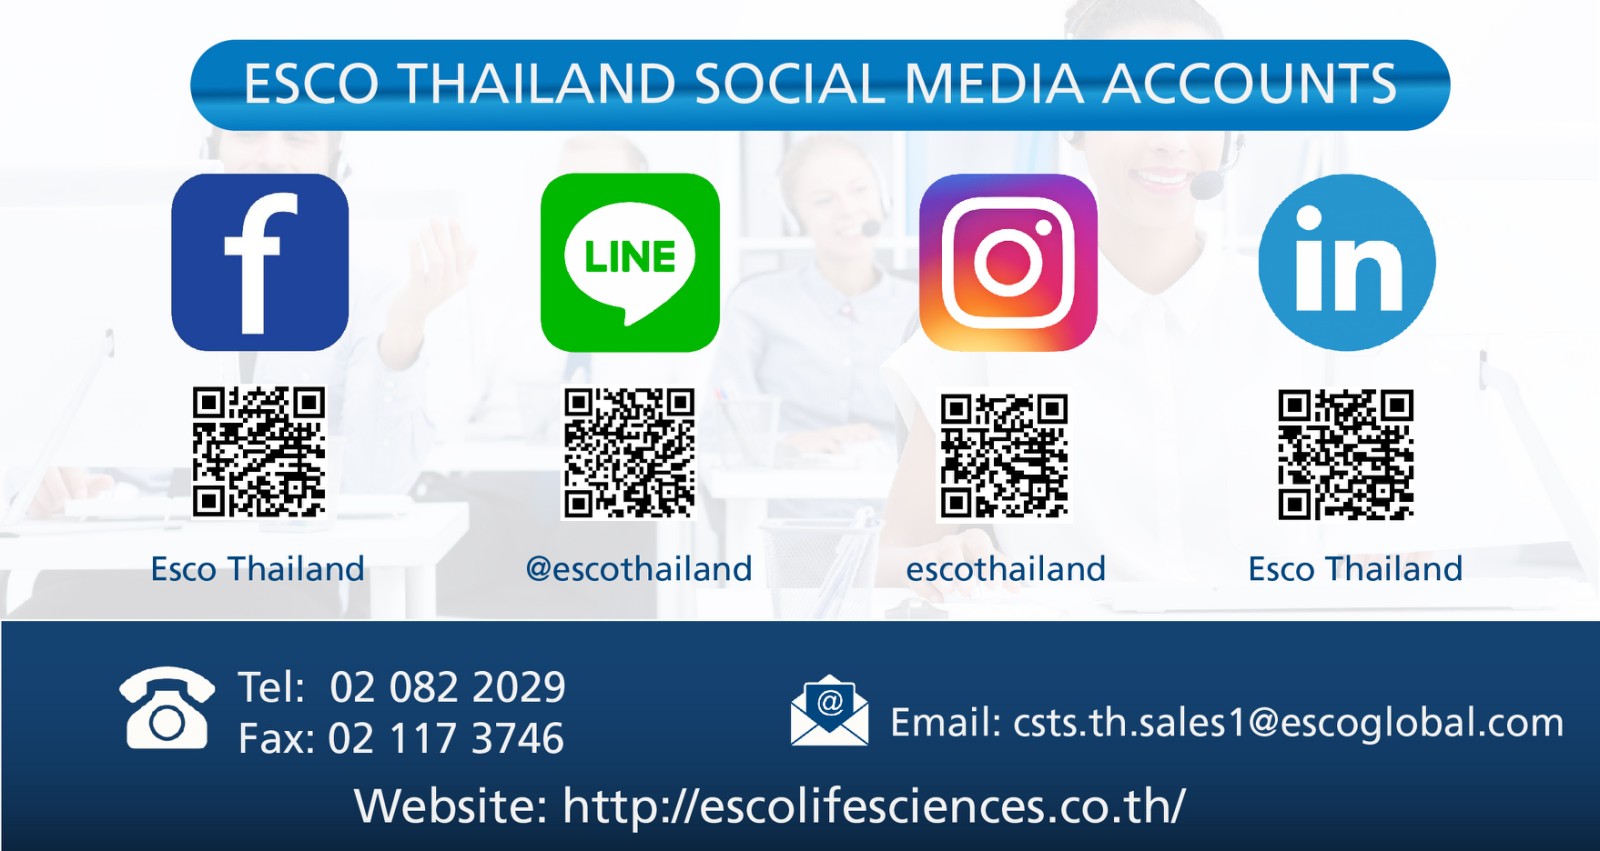 Esco Thailand Social Media Accounts